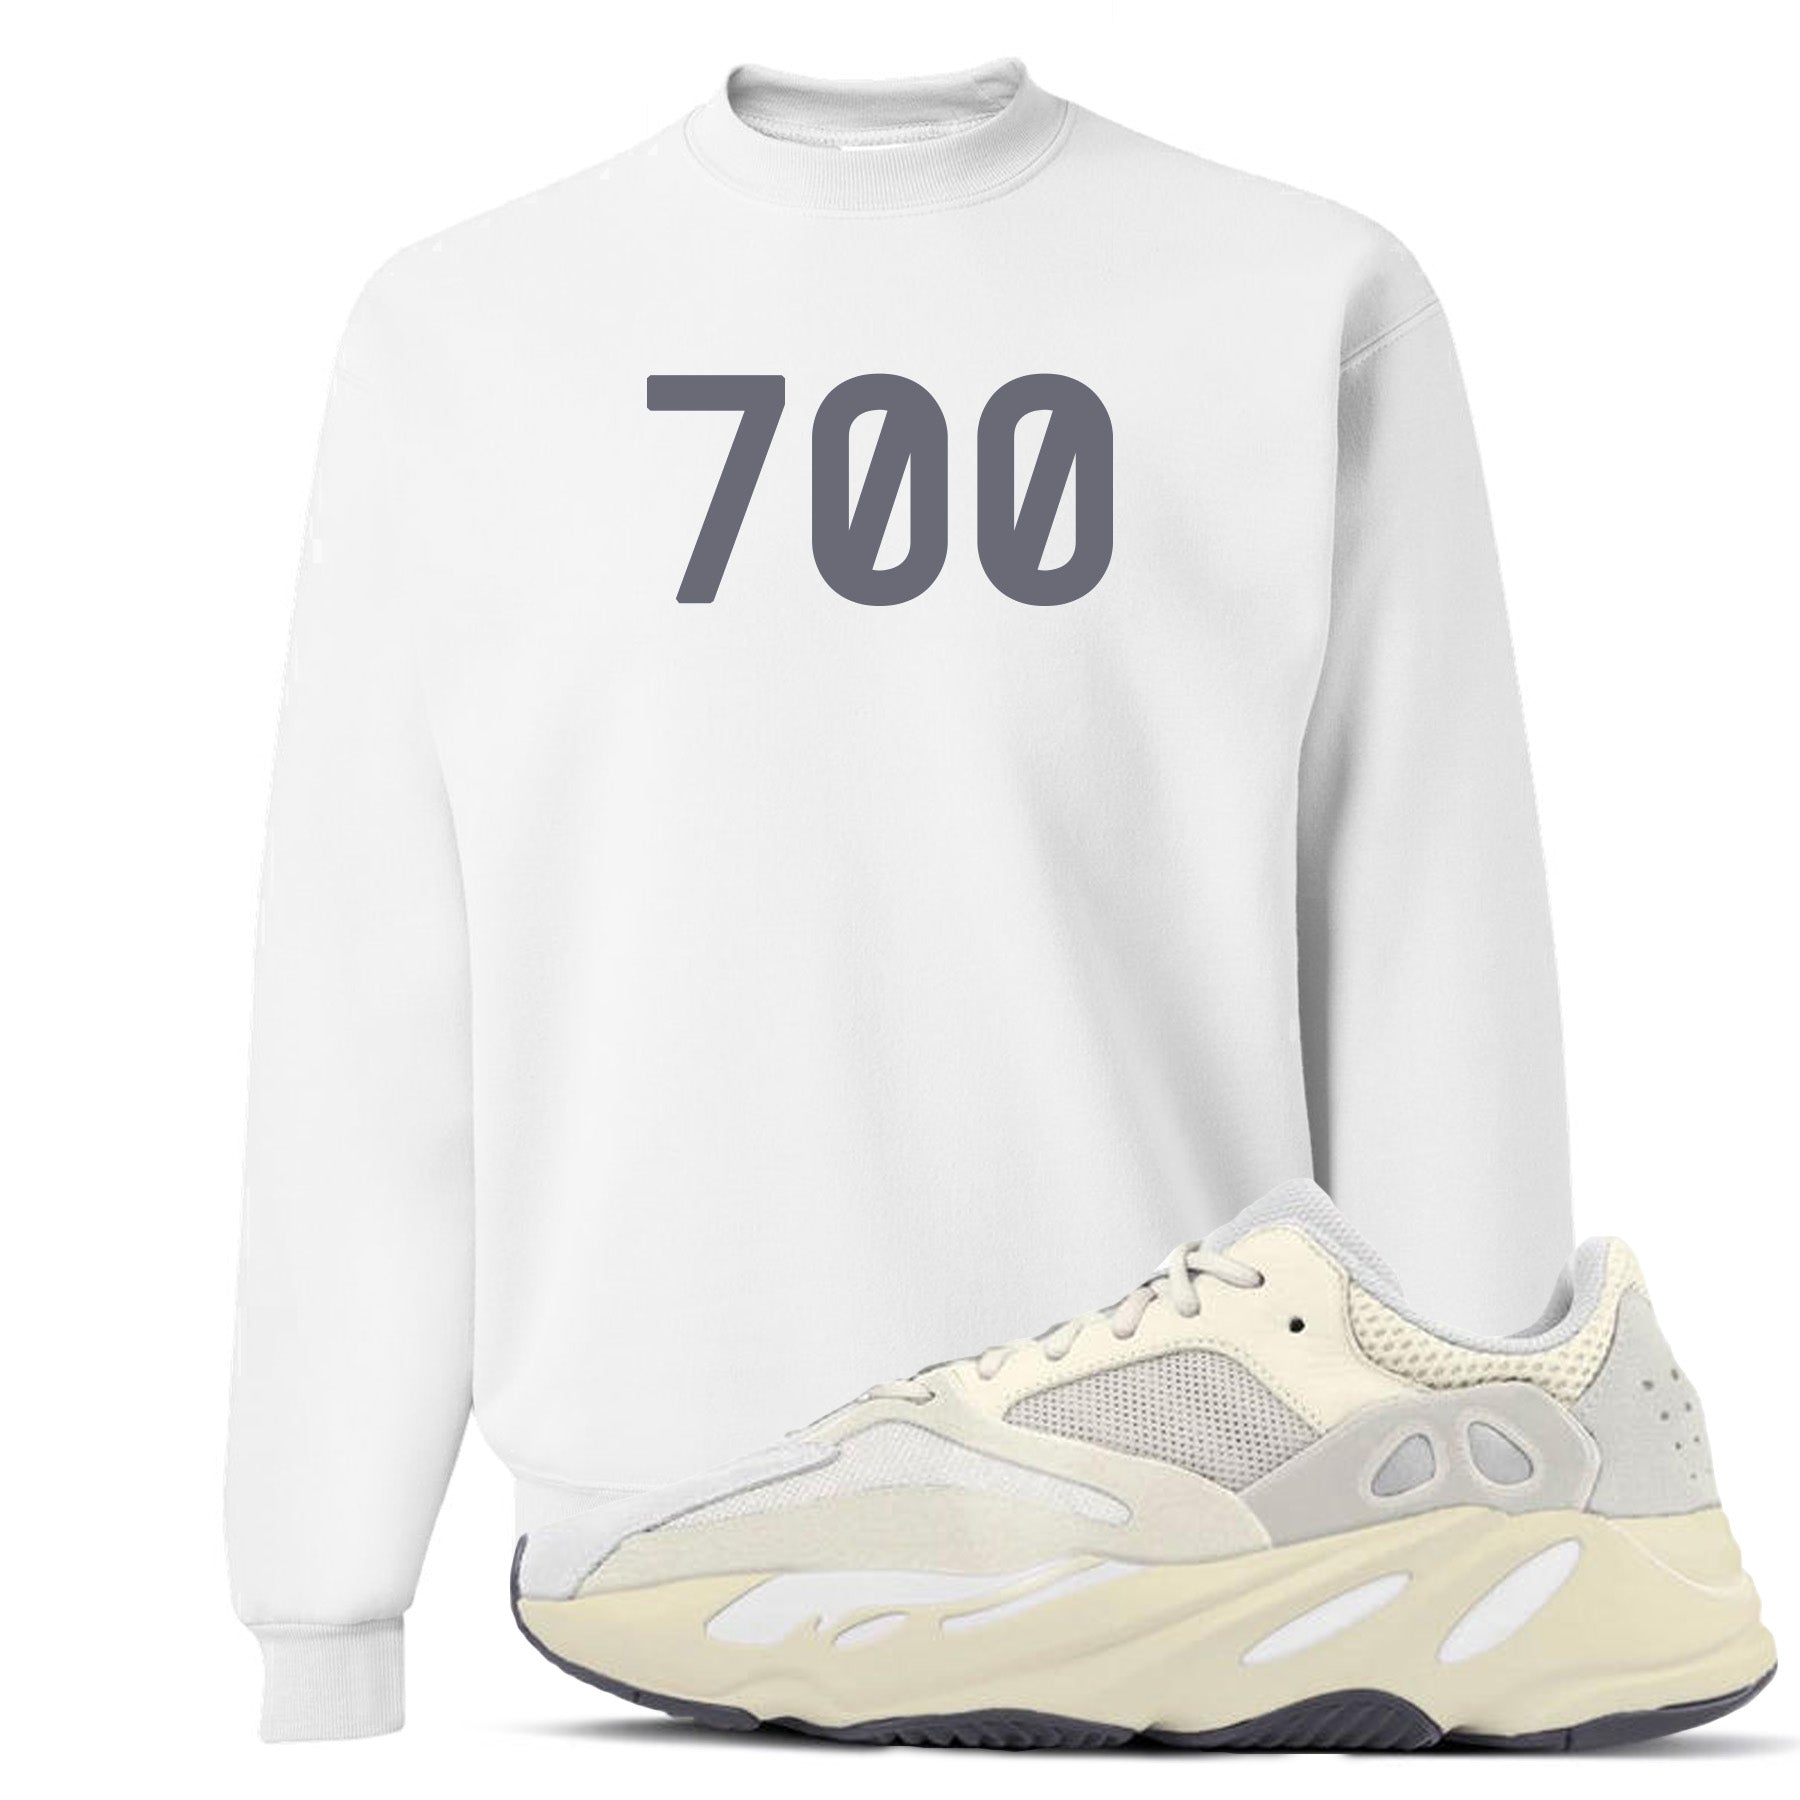 sweater to match yeezy 700